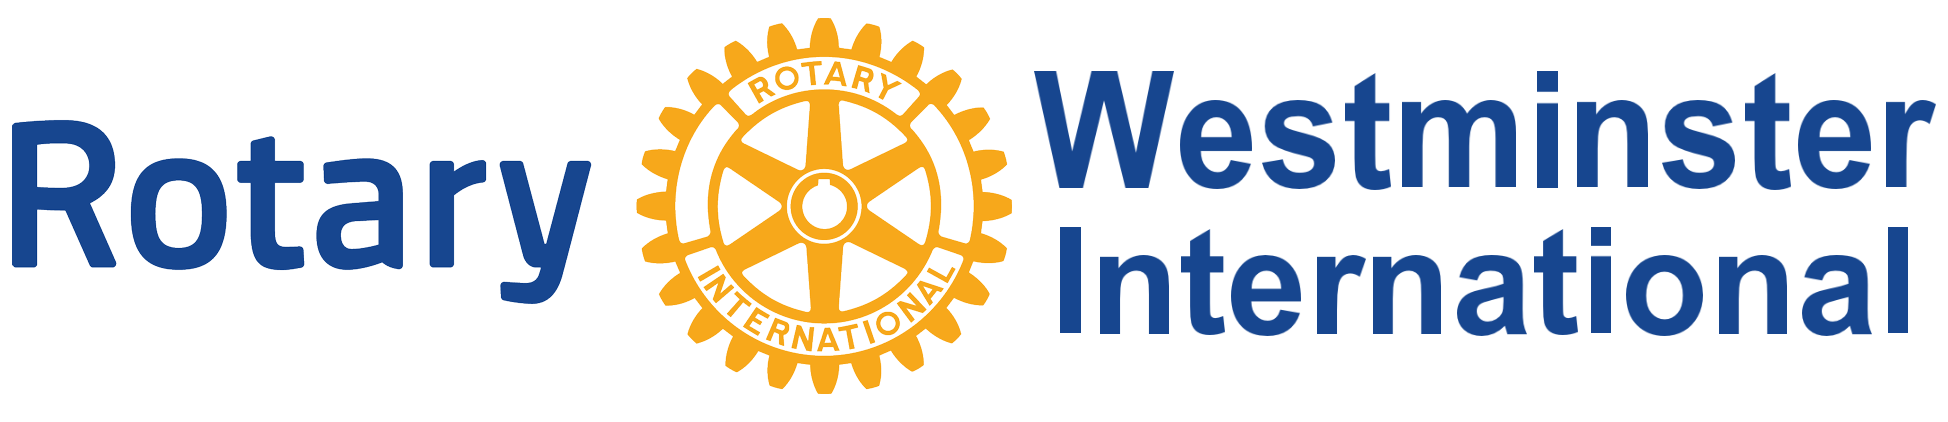 Westminster International Rotary Club